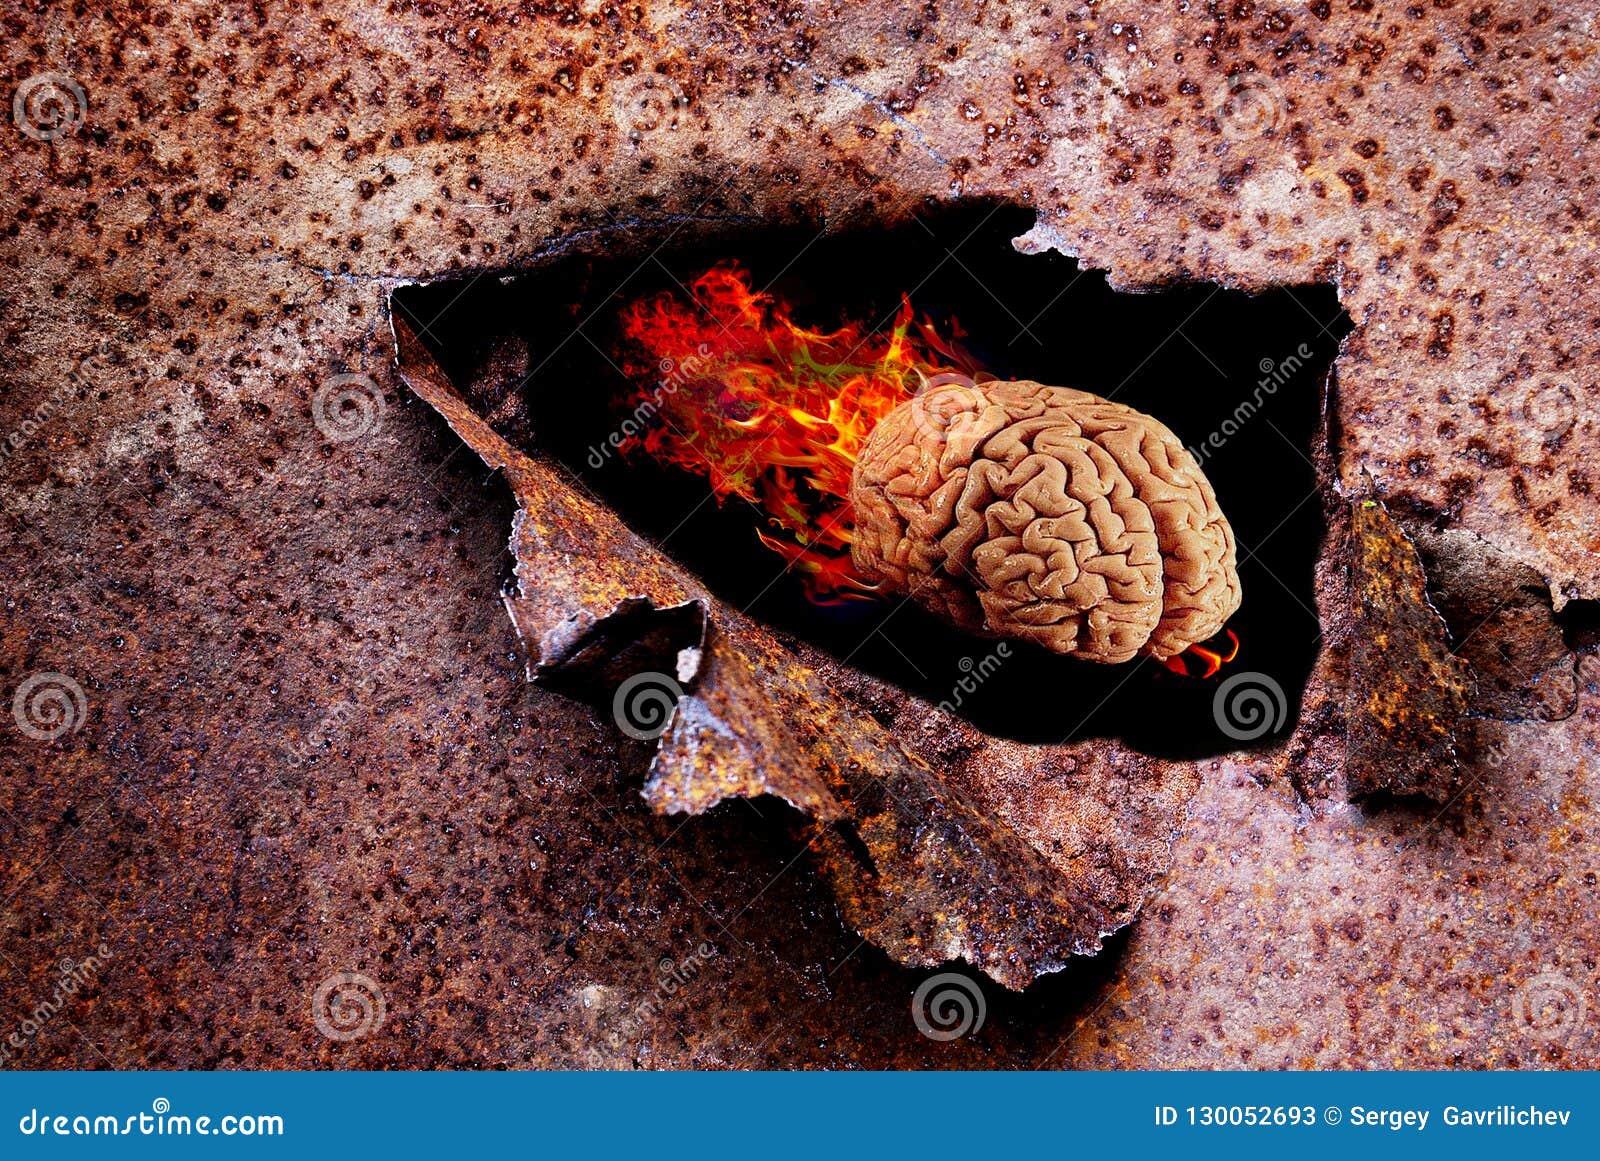 Burning Braincreative Technologies Stock Image Image Of Metallic